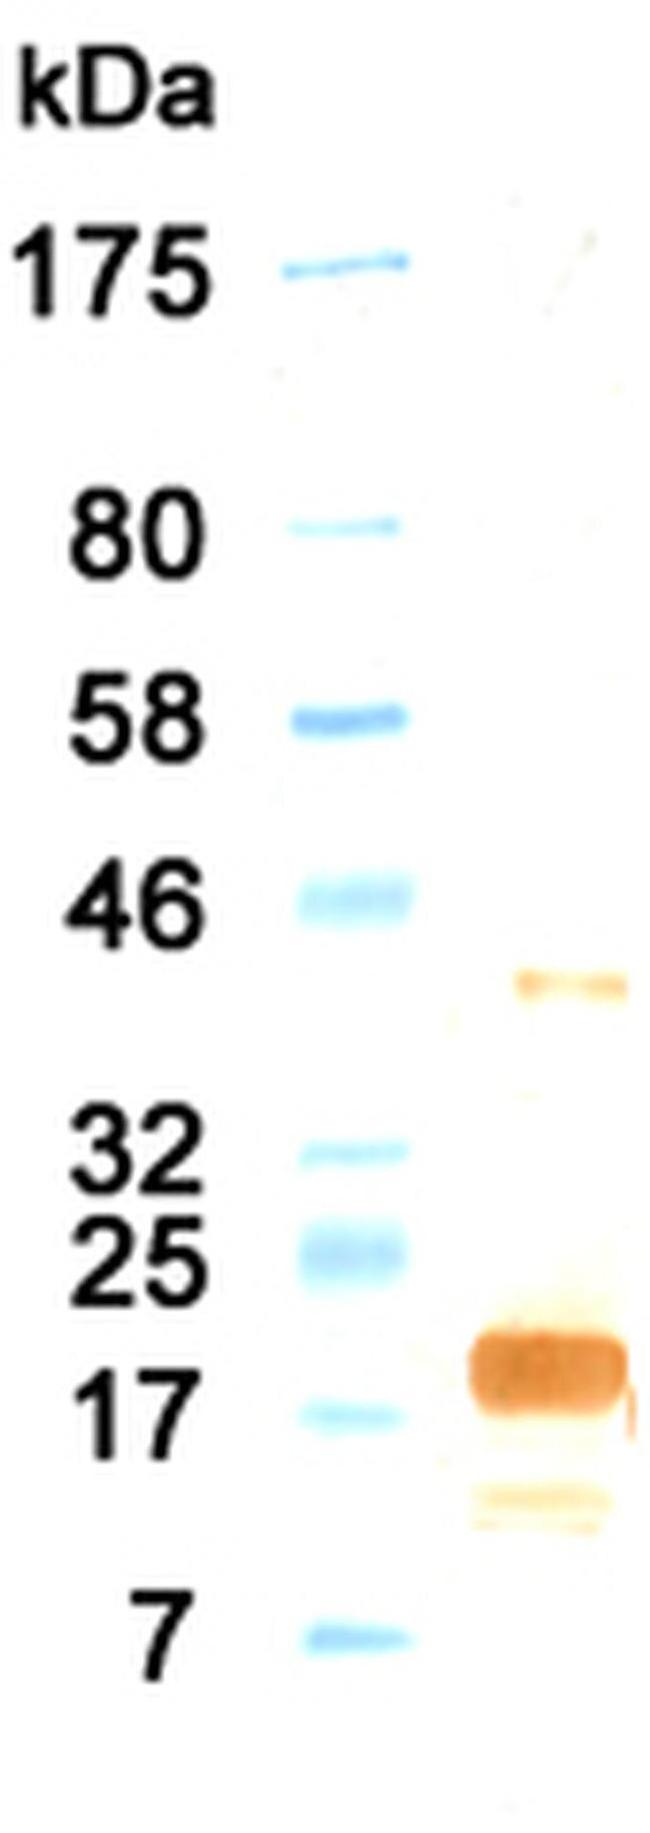 IL-11 Antibody in Western Blot (WB)